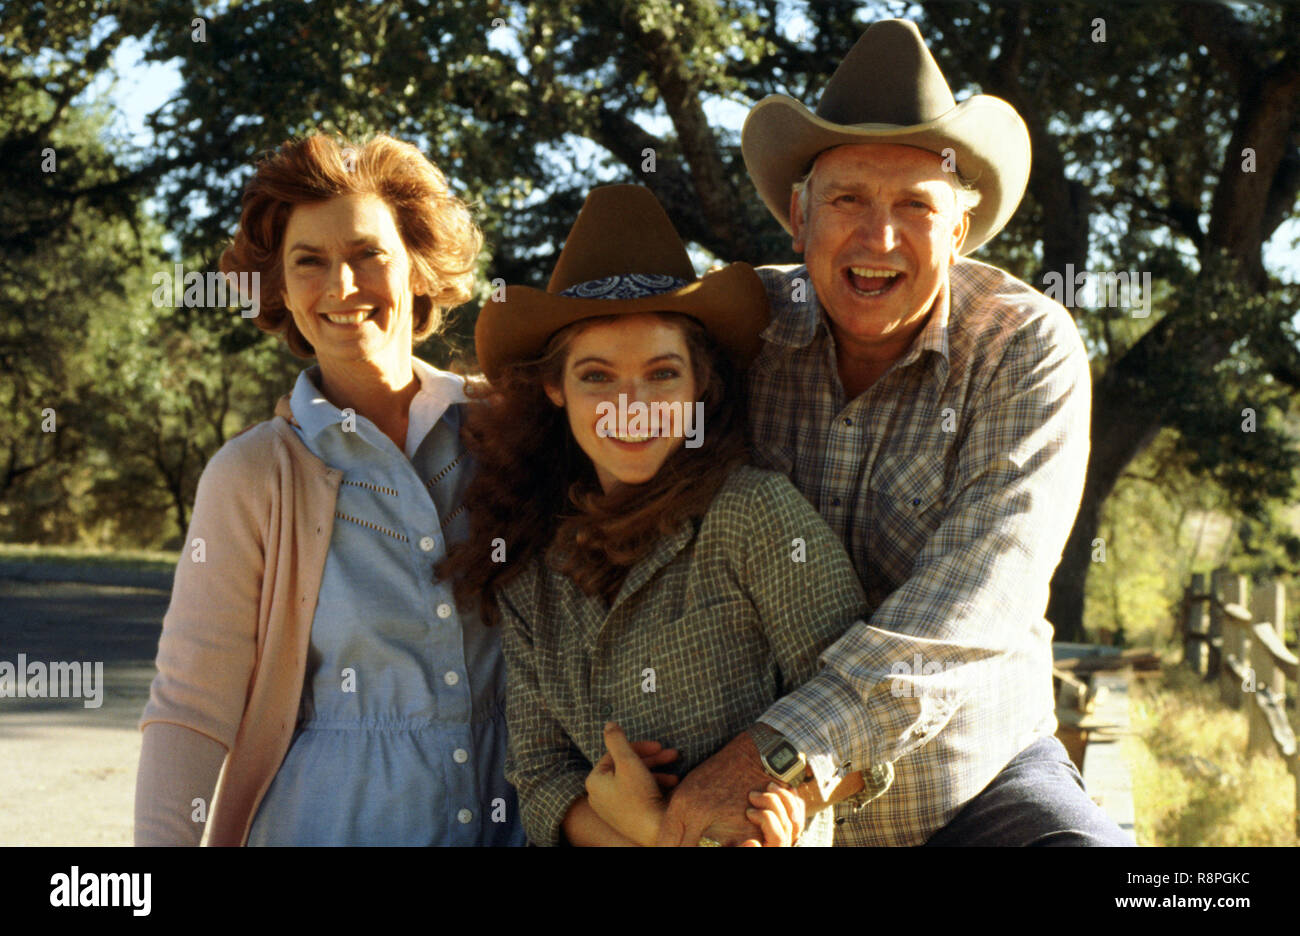 Amy Irving, Slim Pickens, "Honeysuckle Rose" (1980), Warner Bros.-Datei Referenz # 33635 607 THA Stockfoto